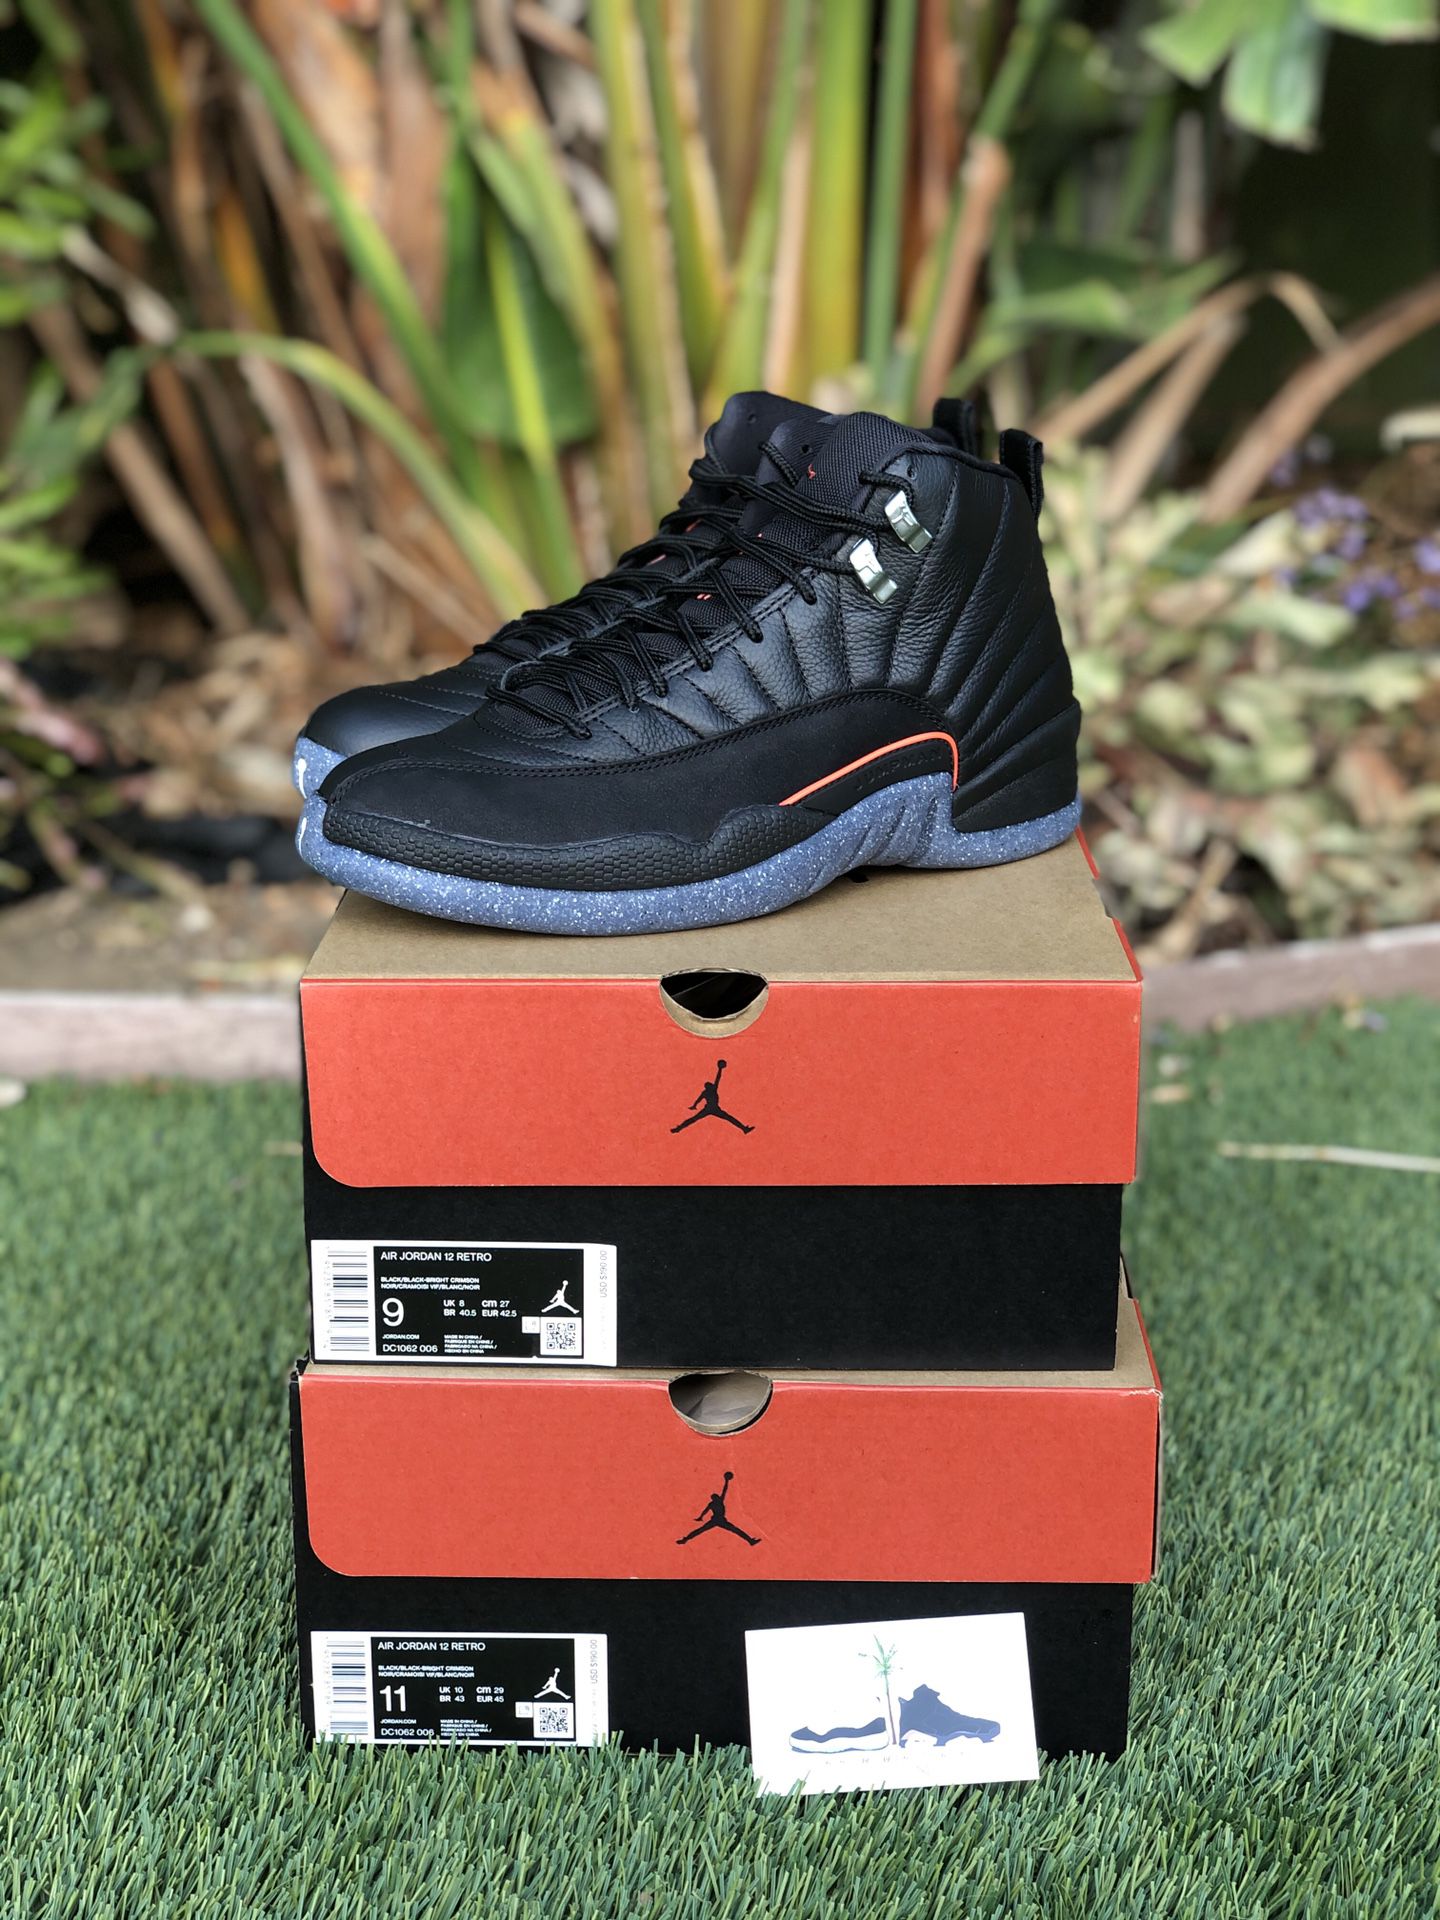 Nike Air Jordan Retro 12 Utility Black Size 6y, 9, 10, 10.5 & 11